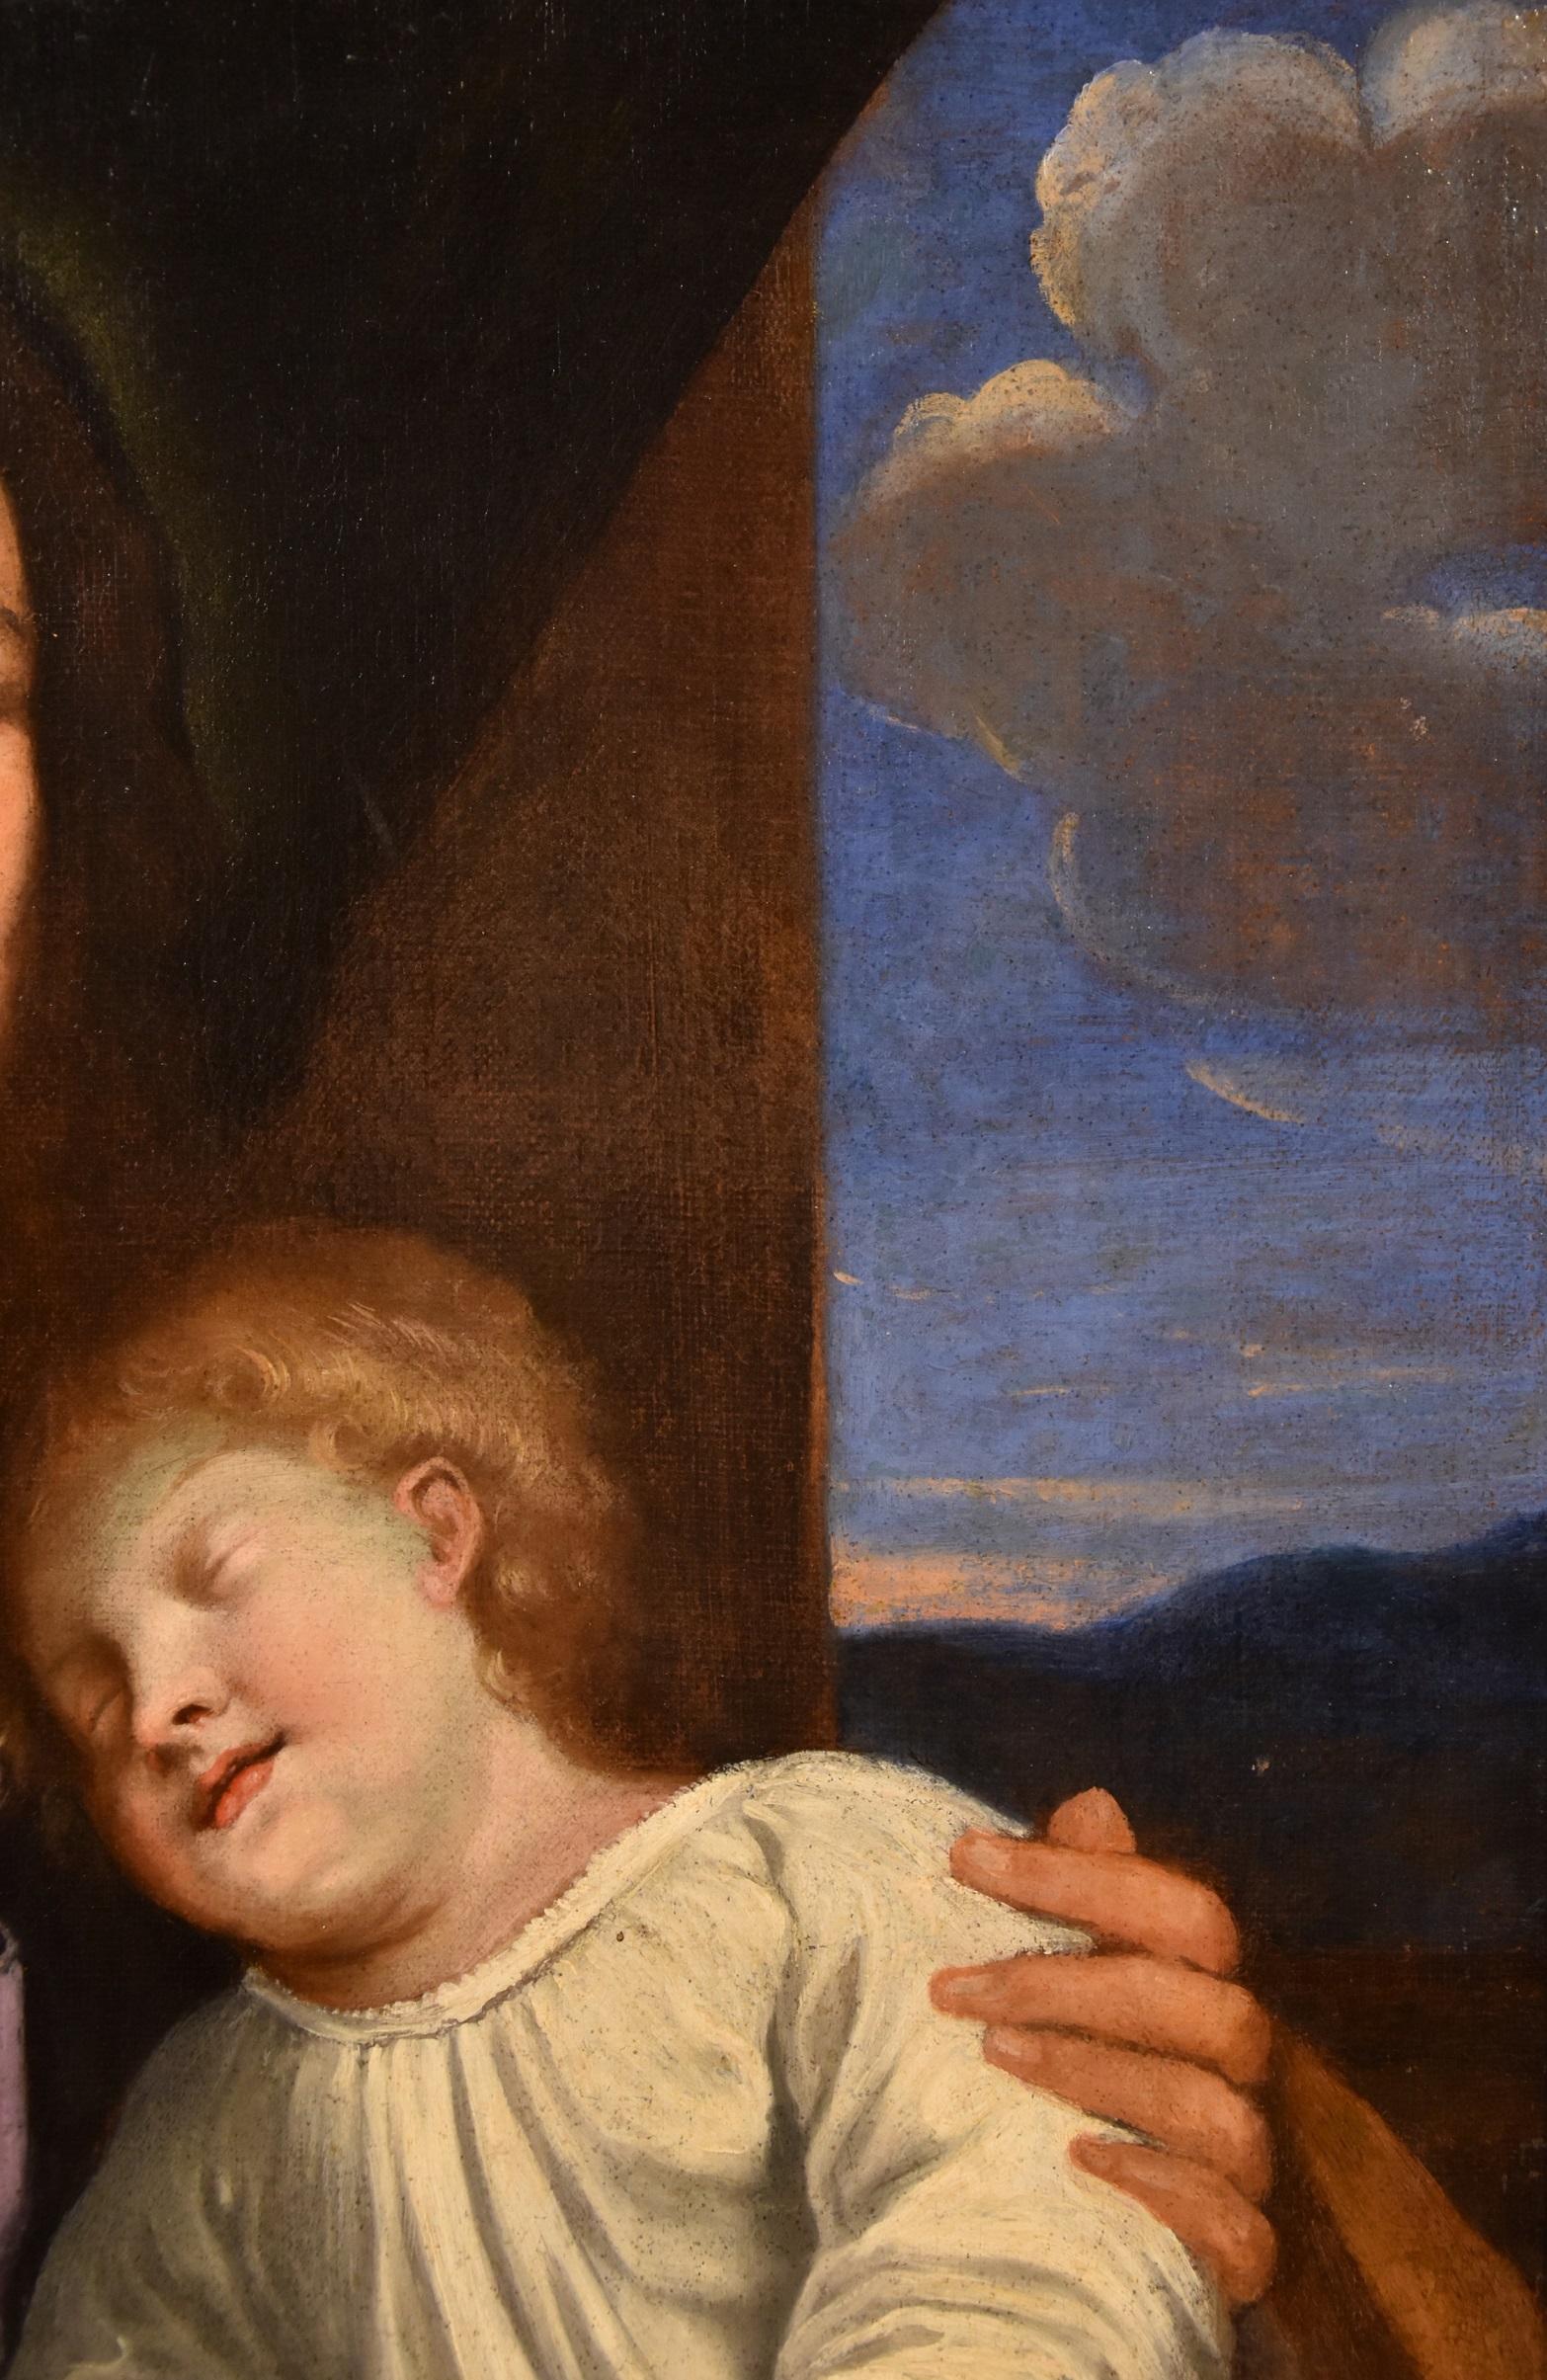 Jesus Son Salvi Paint Oil on canvas Old master 17th Century Italian Religious - Brown Portrait Painting by Giovan Battista Salvi known as 